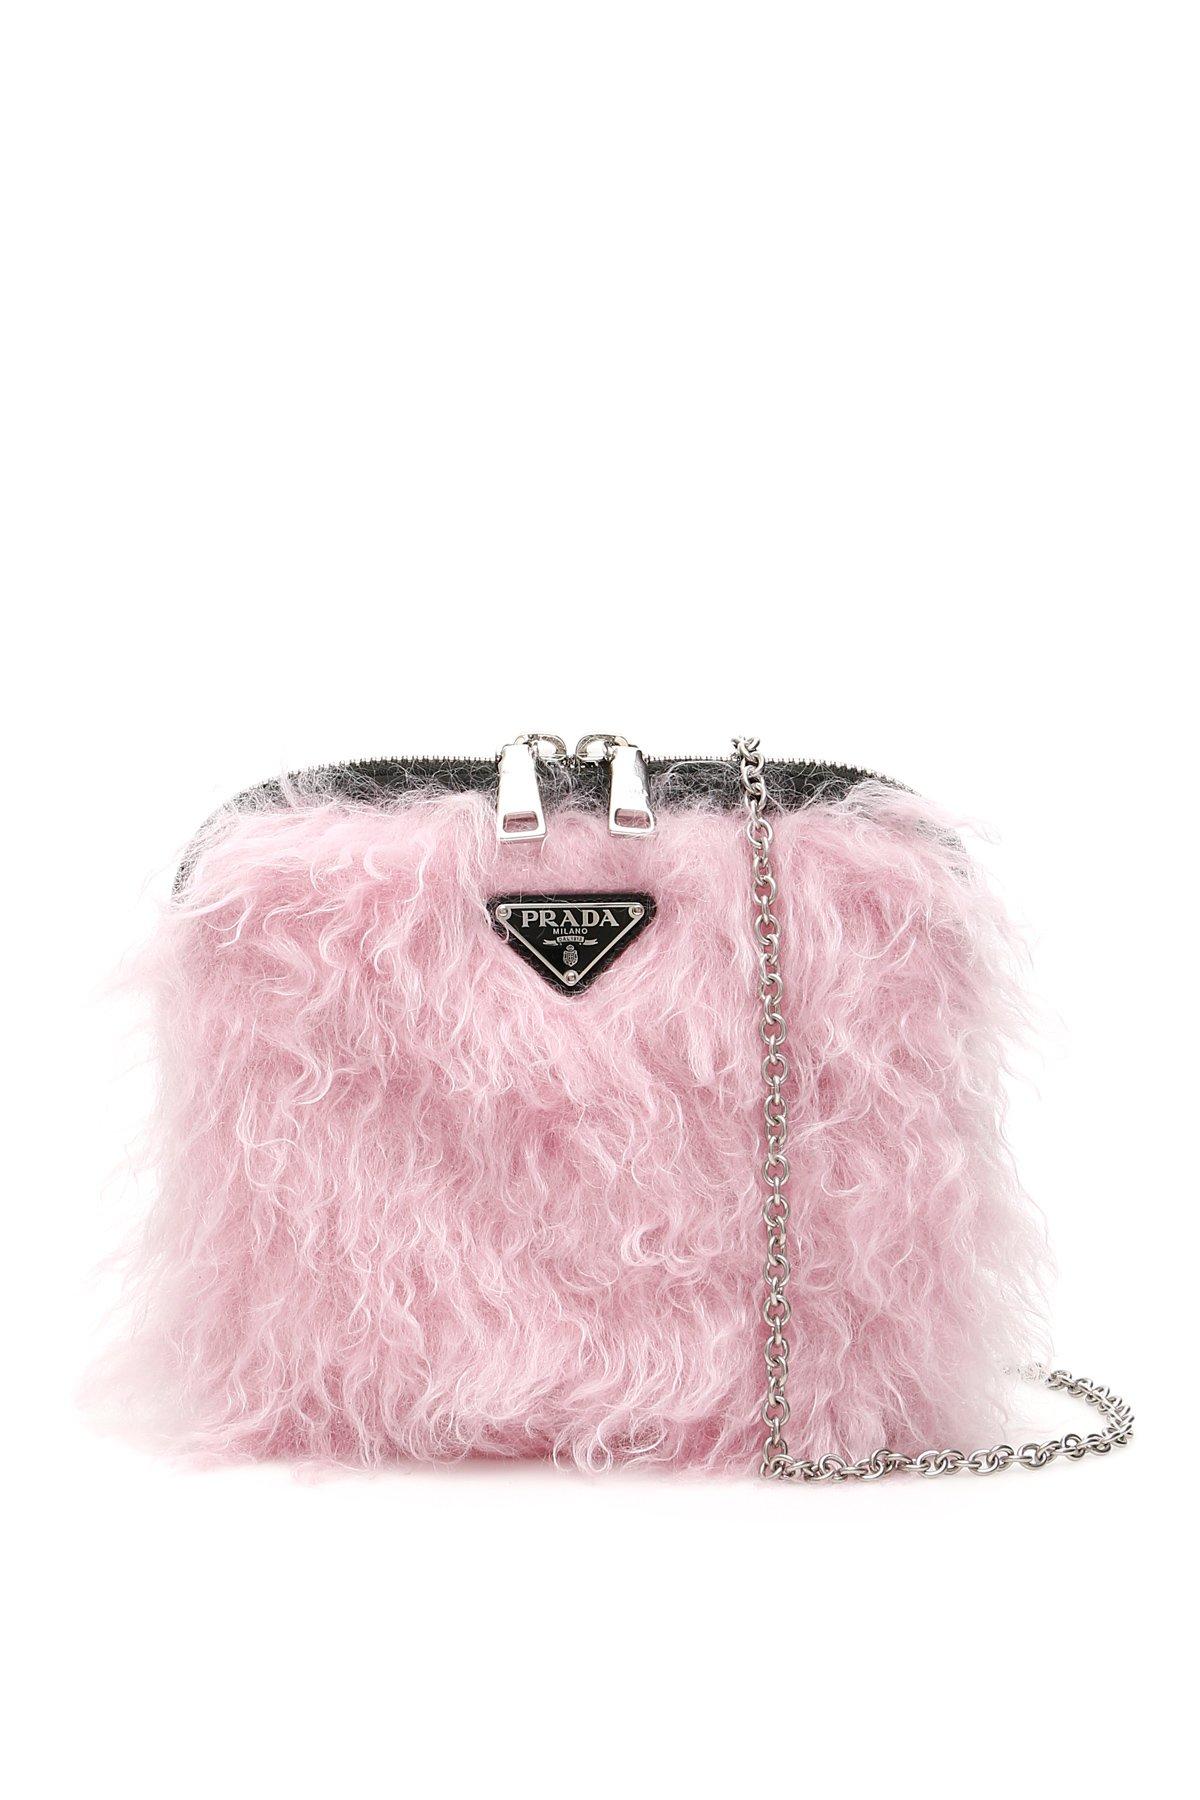 Prada Furry Mini Bag in Black,Pink (Pink) | Lyst